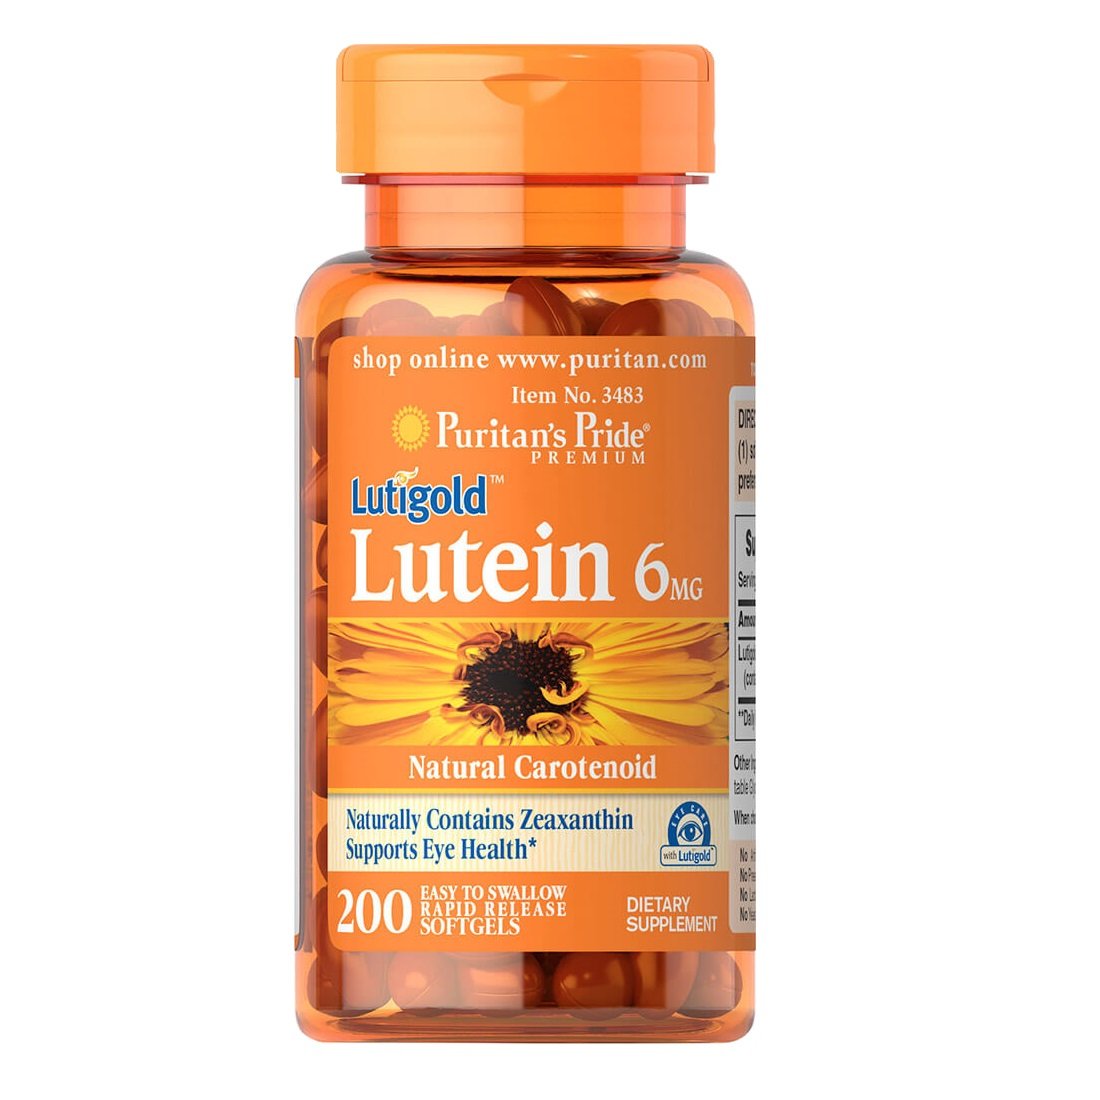 Puritan's Pride Натуральная добавка Puritan's Pride Lutein 6 mg with Zeaxanthin, 200 капсул, , 